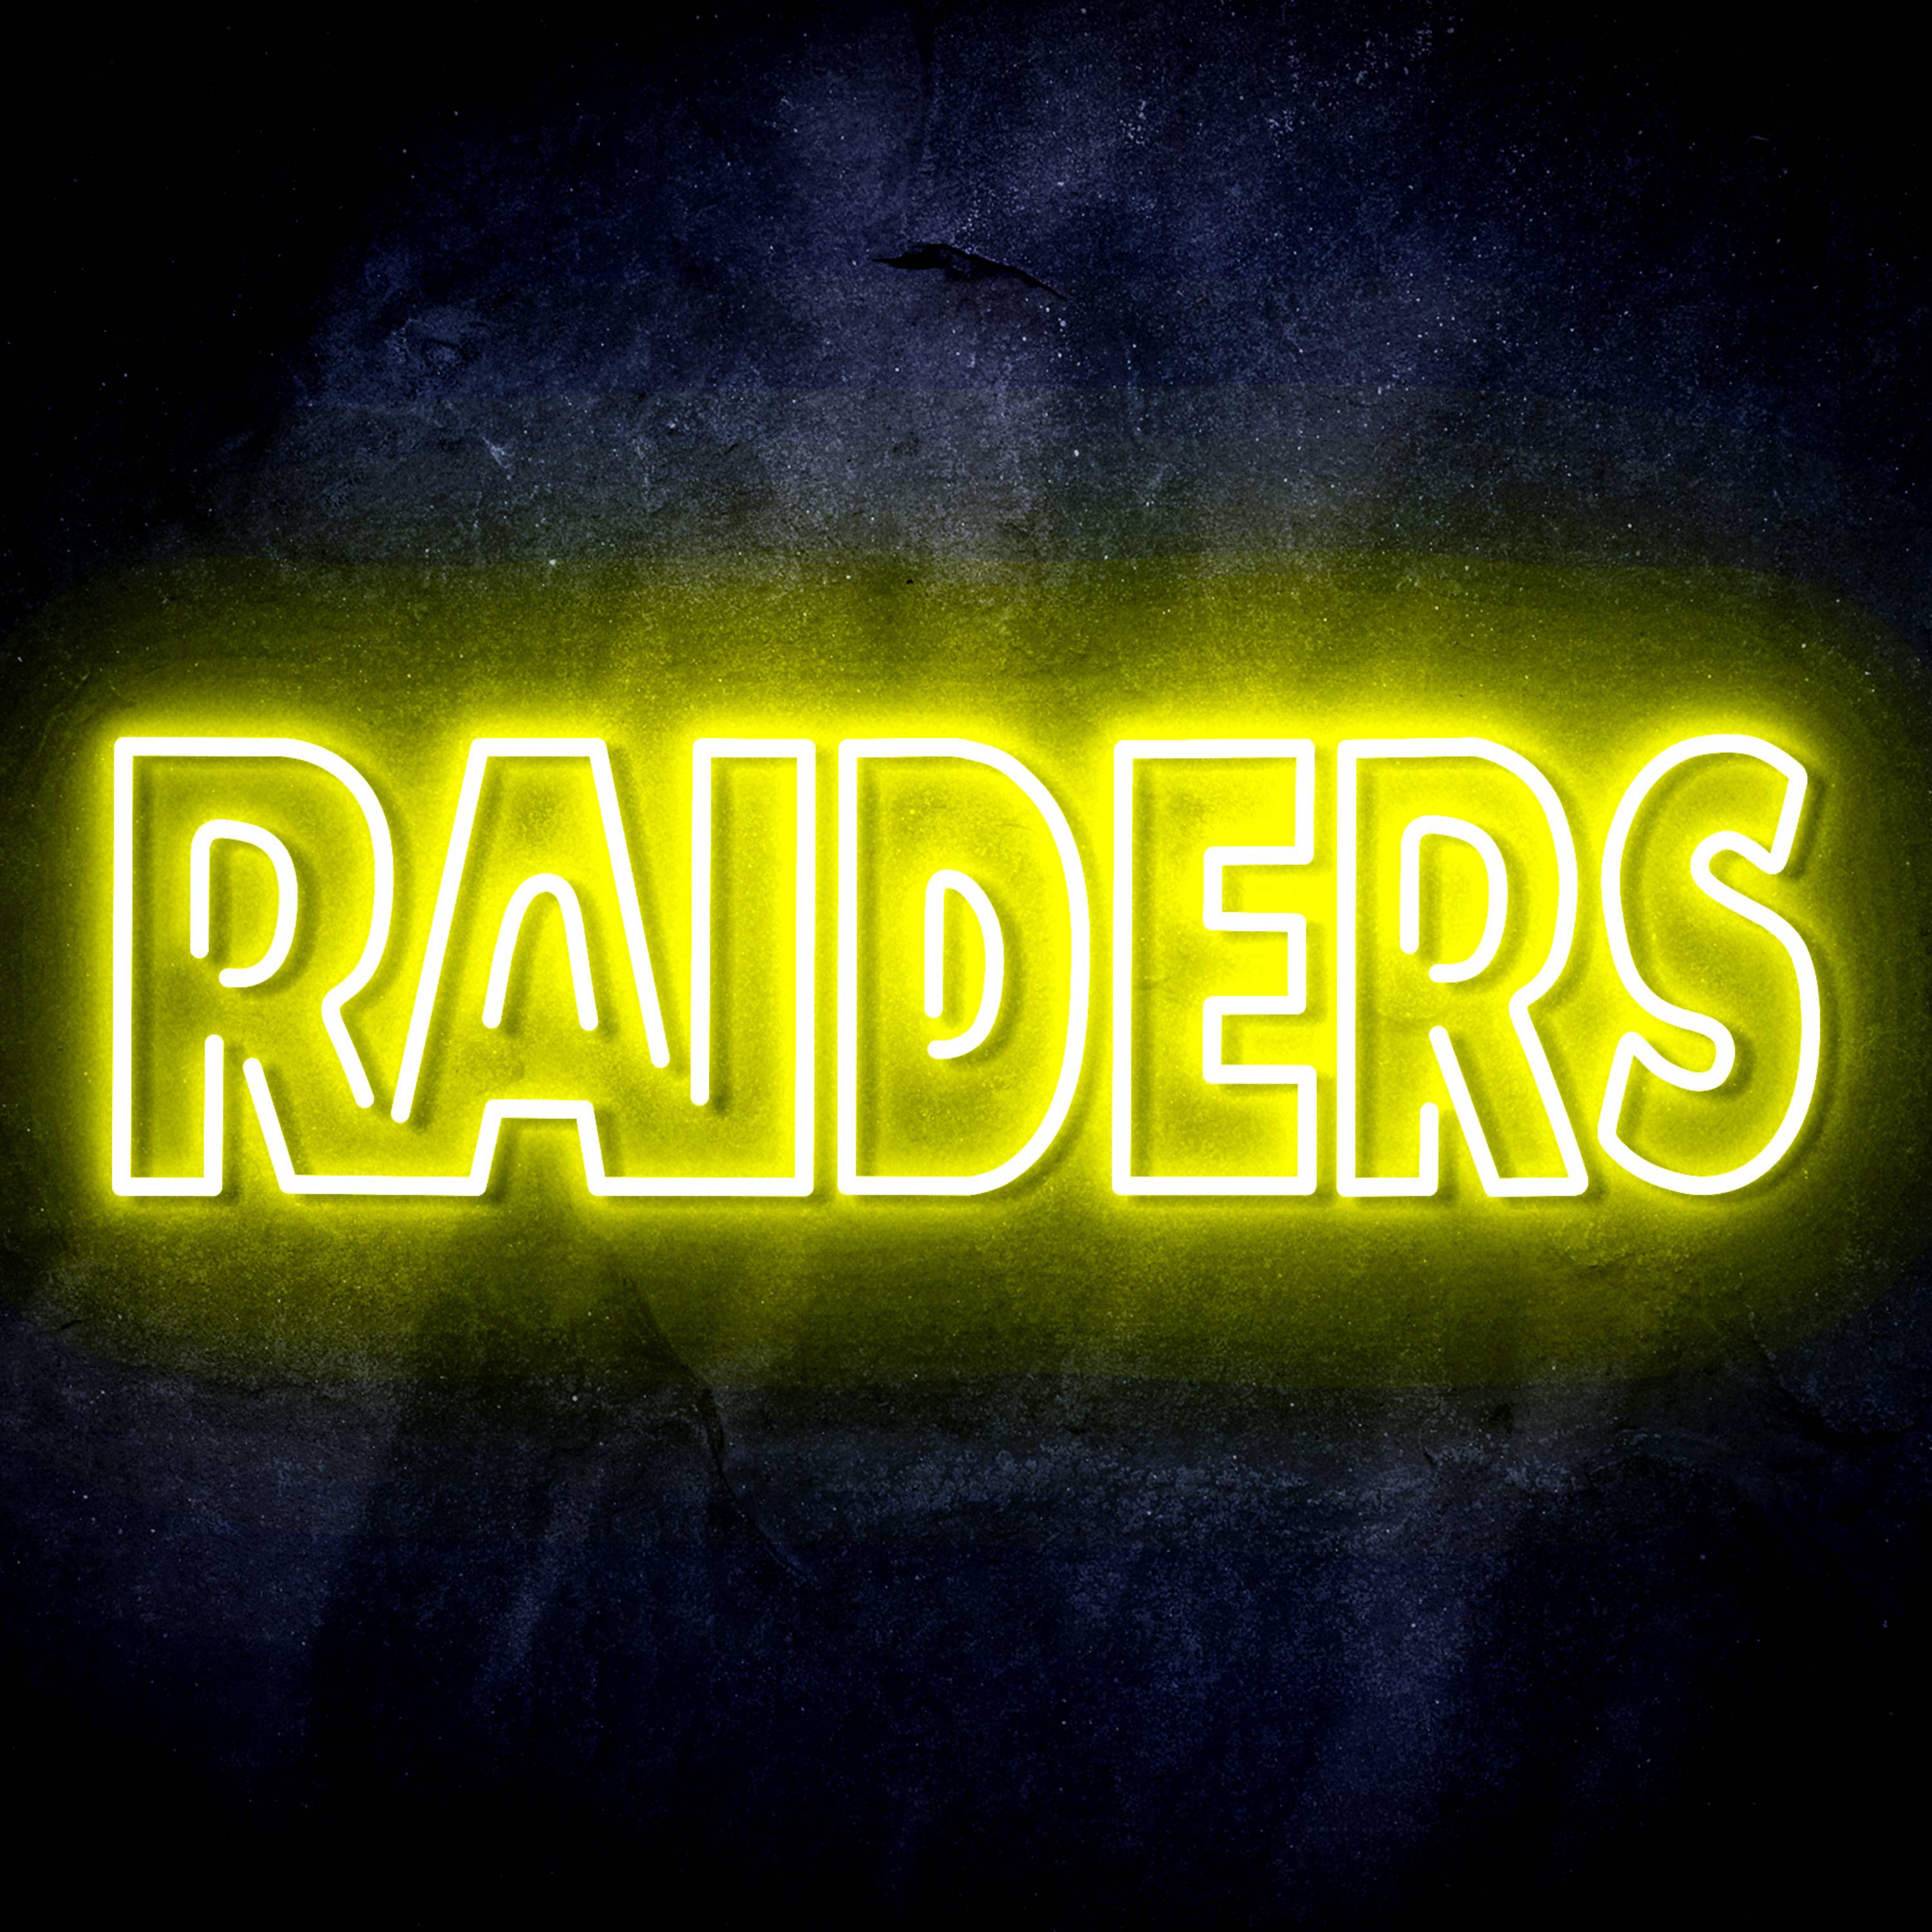 NFL RAIDERS LED Neon Sign